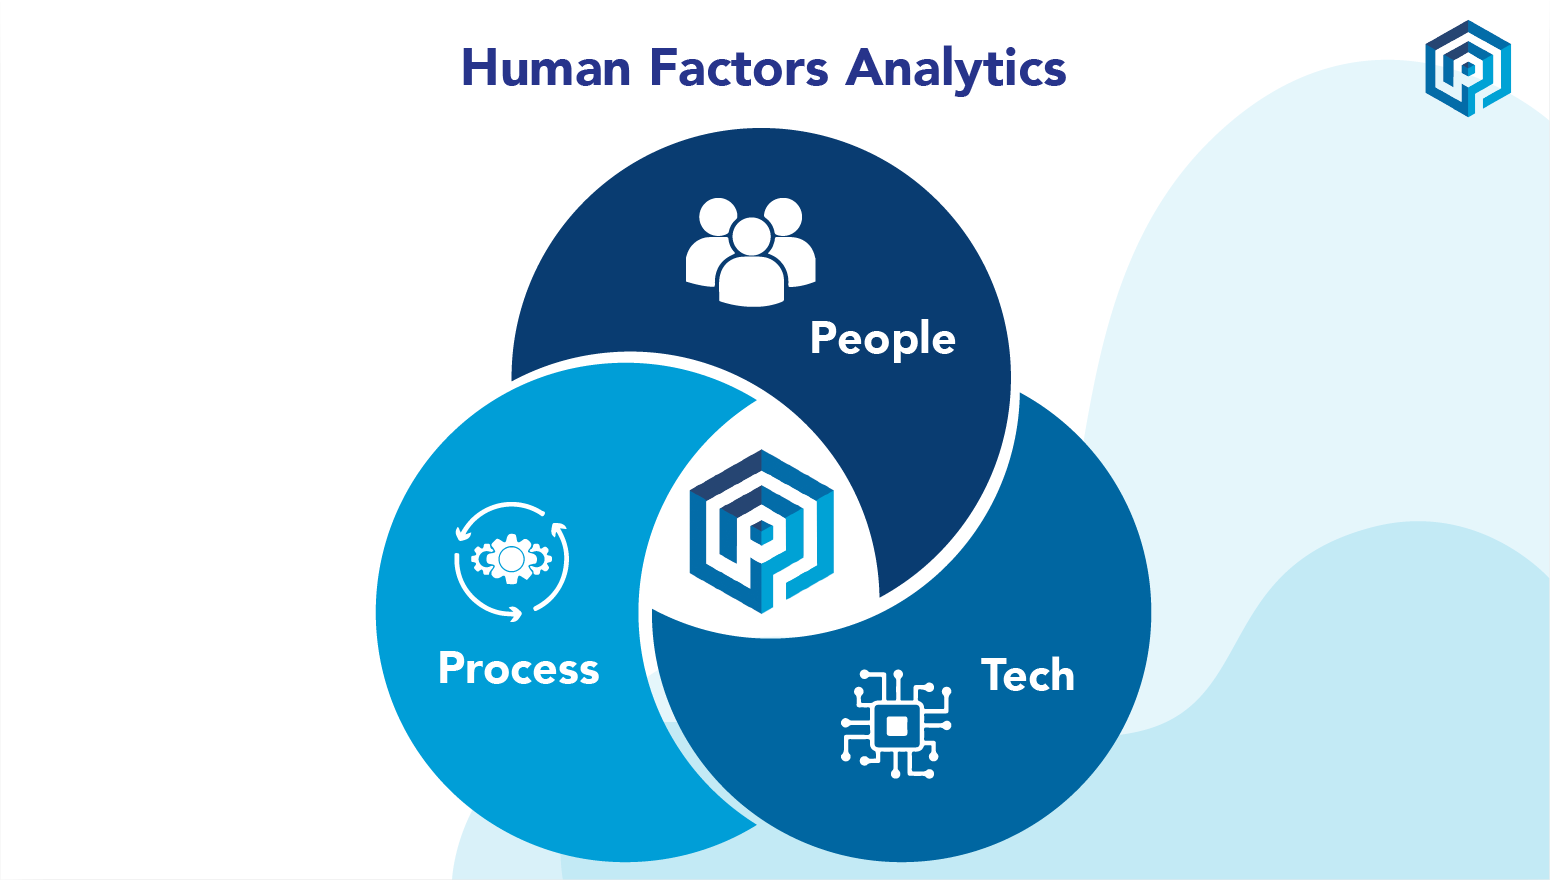 Praxis Navigator infographic showing Human Factors Analytics